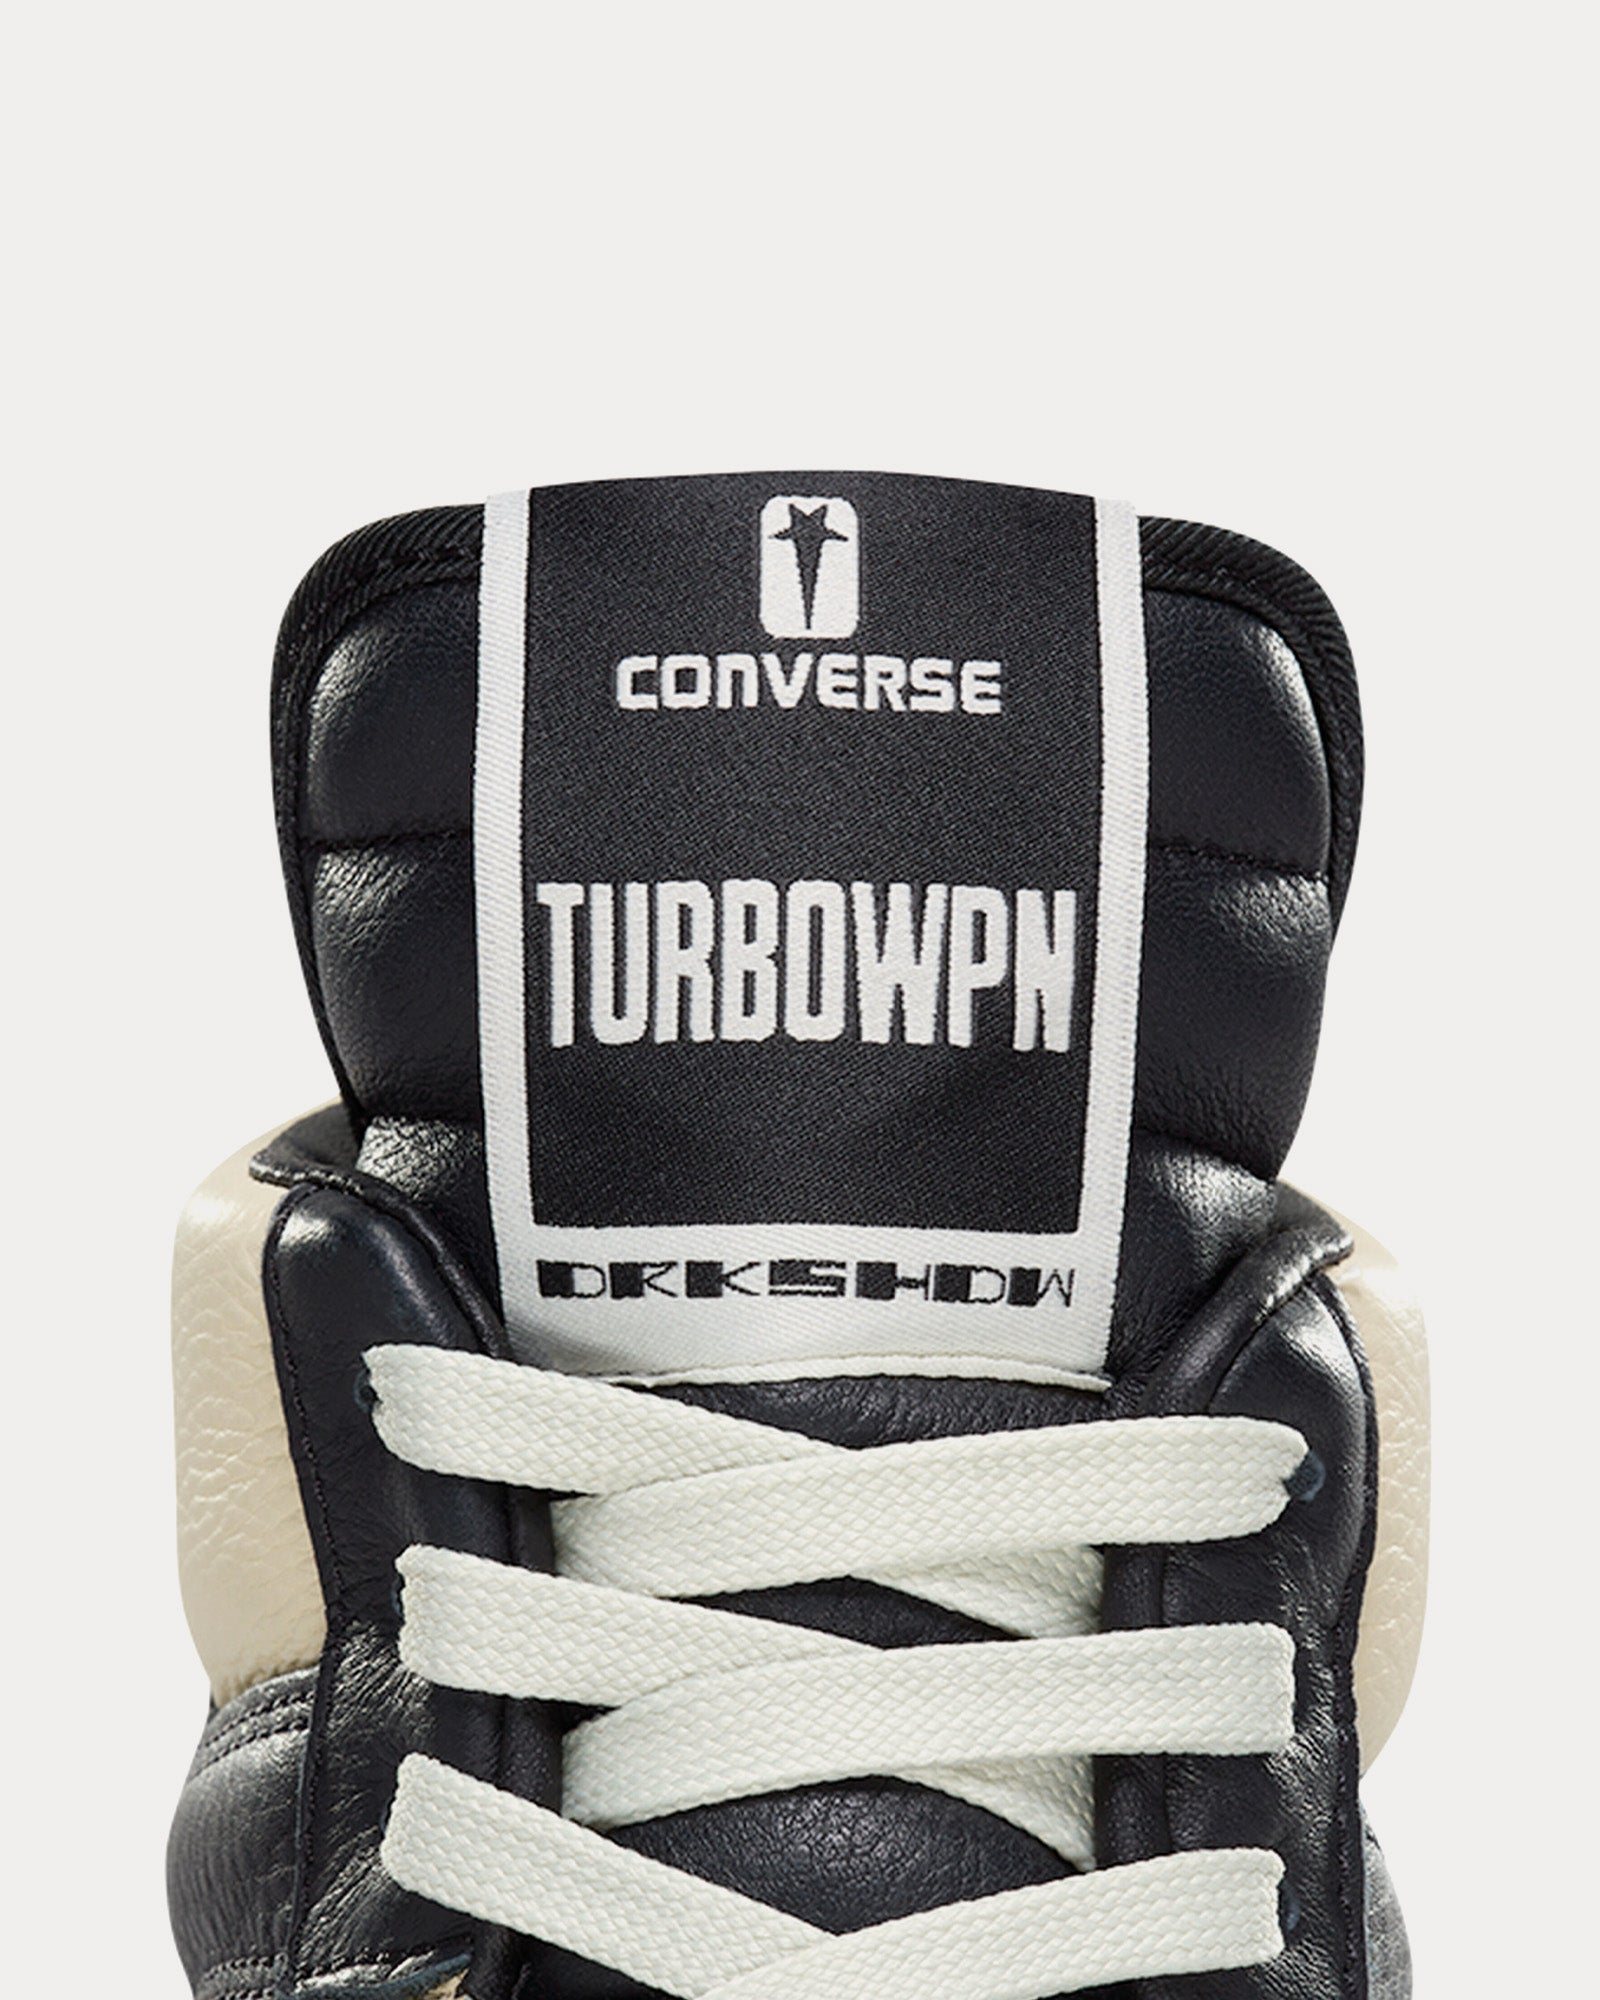 Converse x Rick Owens DRKSHDW - TURBOWPN Black / Cloud Cream / Egret High Top Sneakers